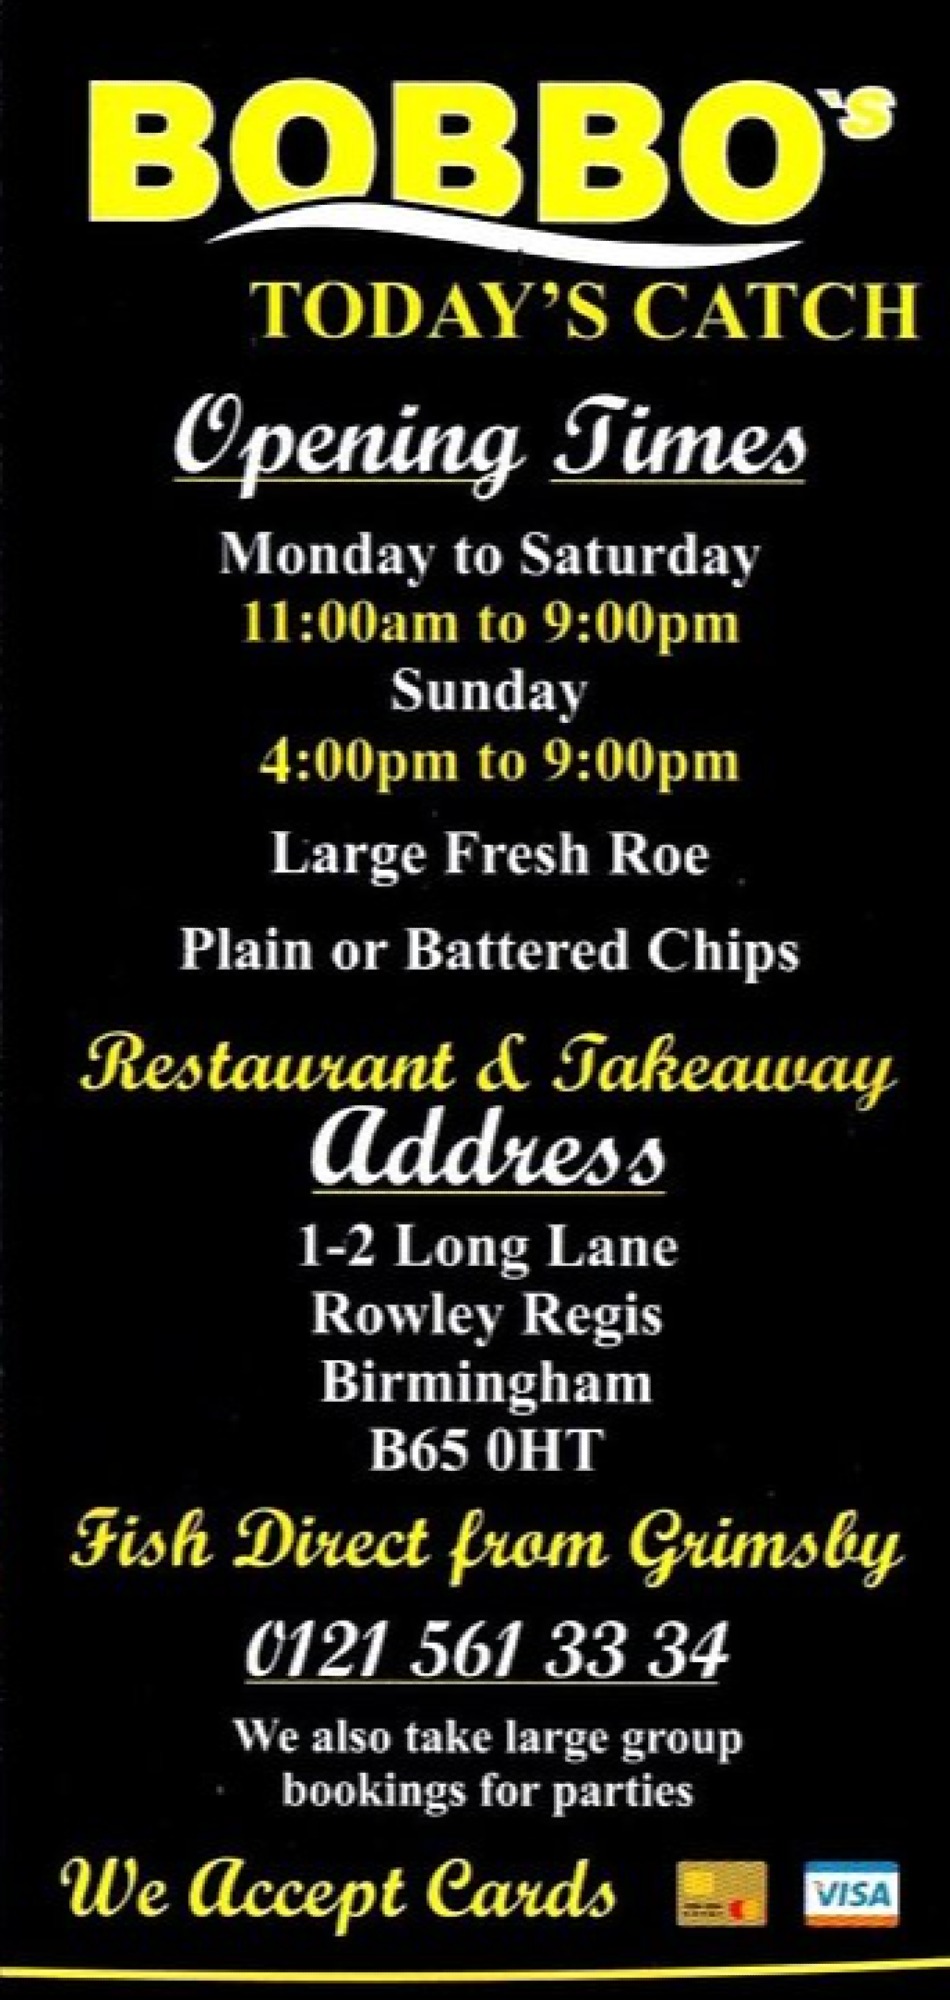 Takeaway Restaurant Menu Page - Bobbo’s Today’s Catch Restaurant and Takeaway Rowley Regis - Halesowen